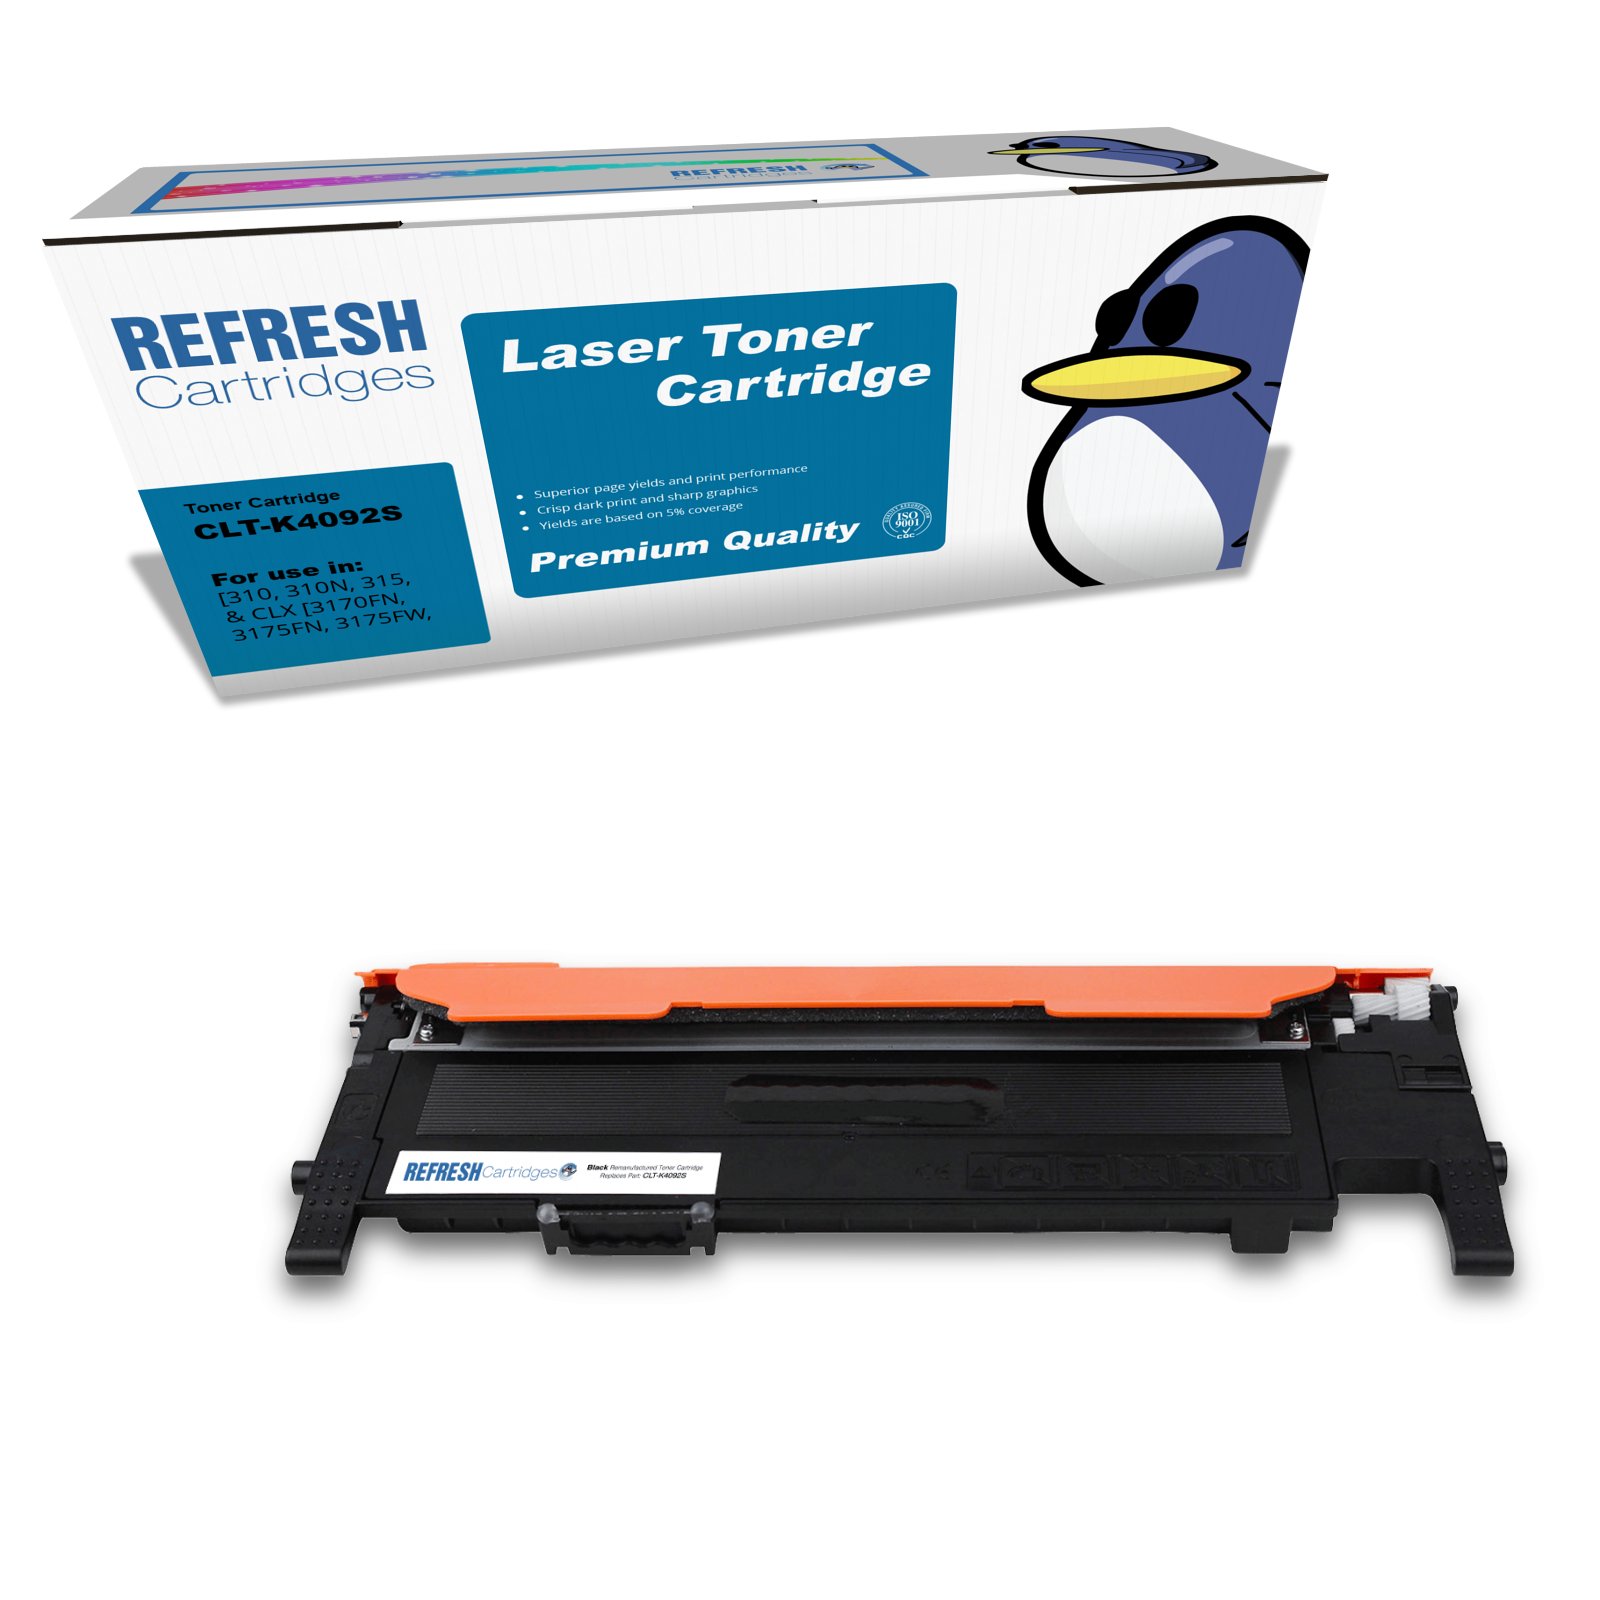 Remanufactured K4092 (CLT-K4092S/ELS) Black Toner Cartridge Replacement for Samsung Printers